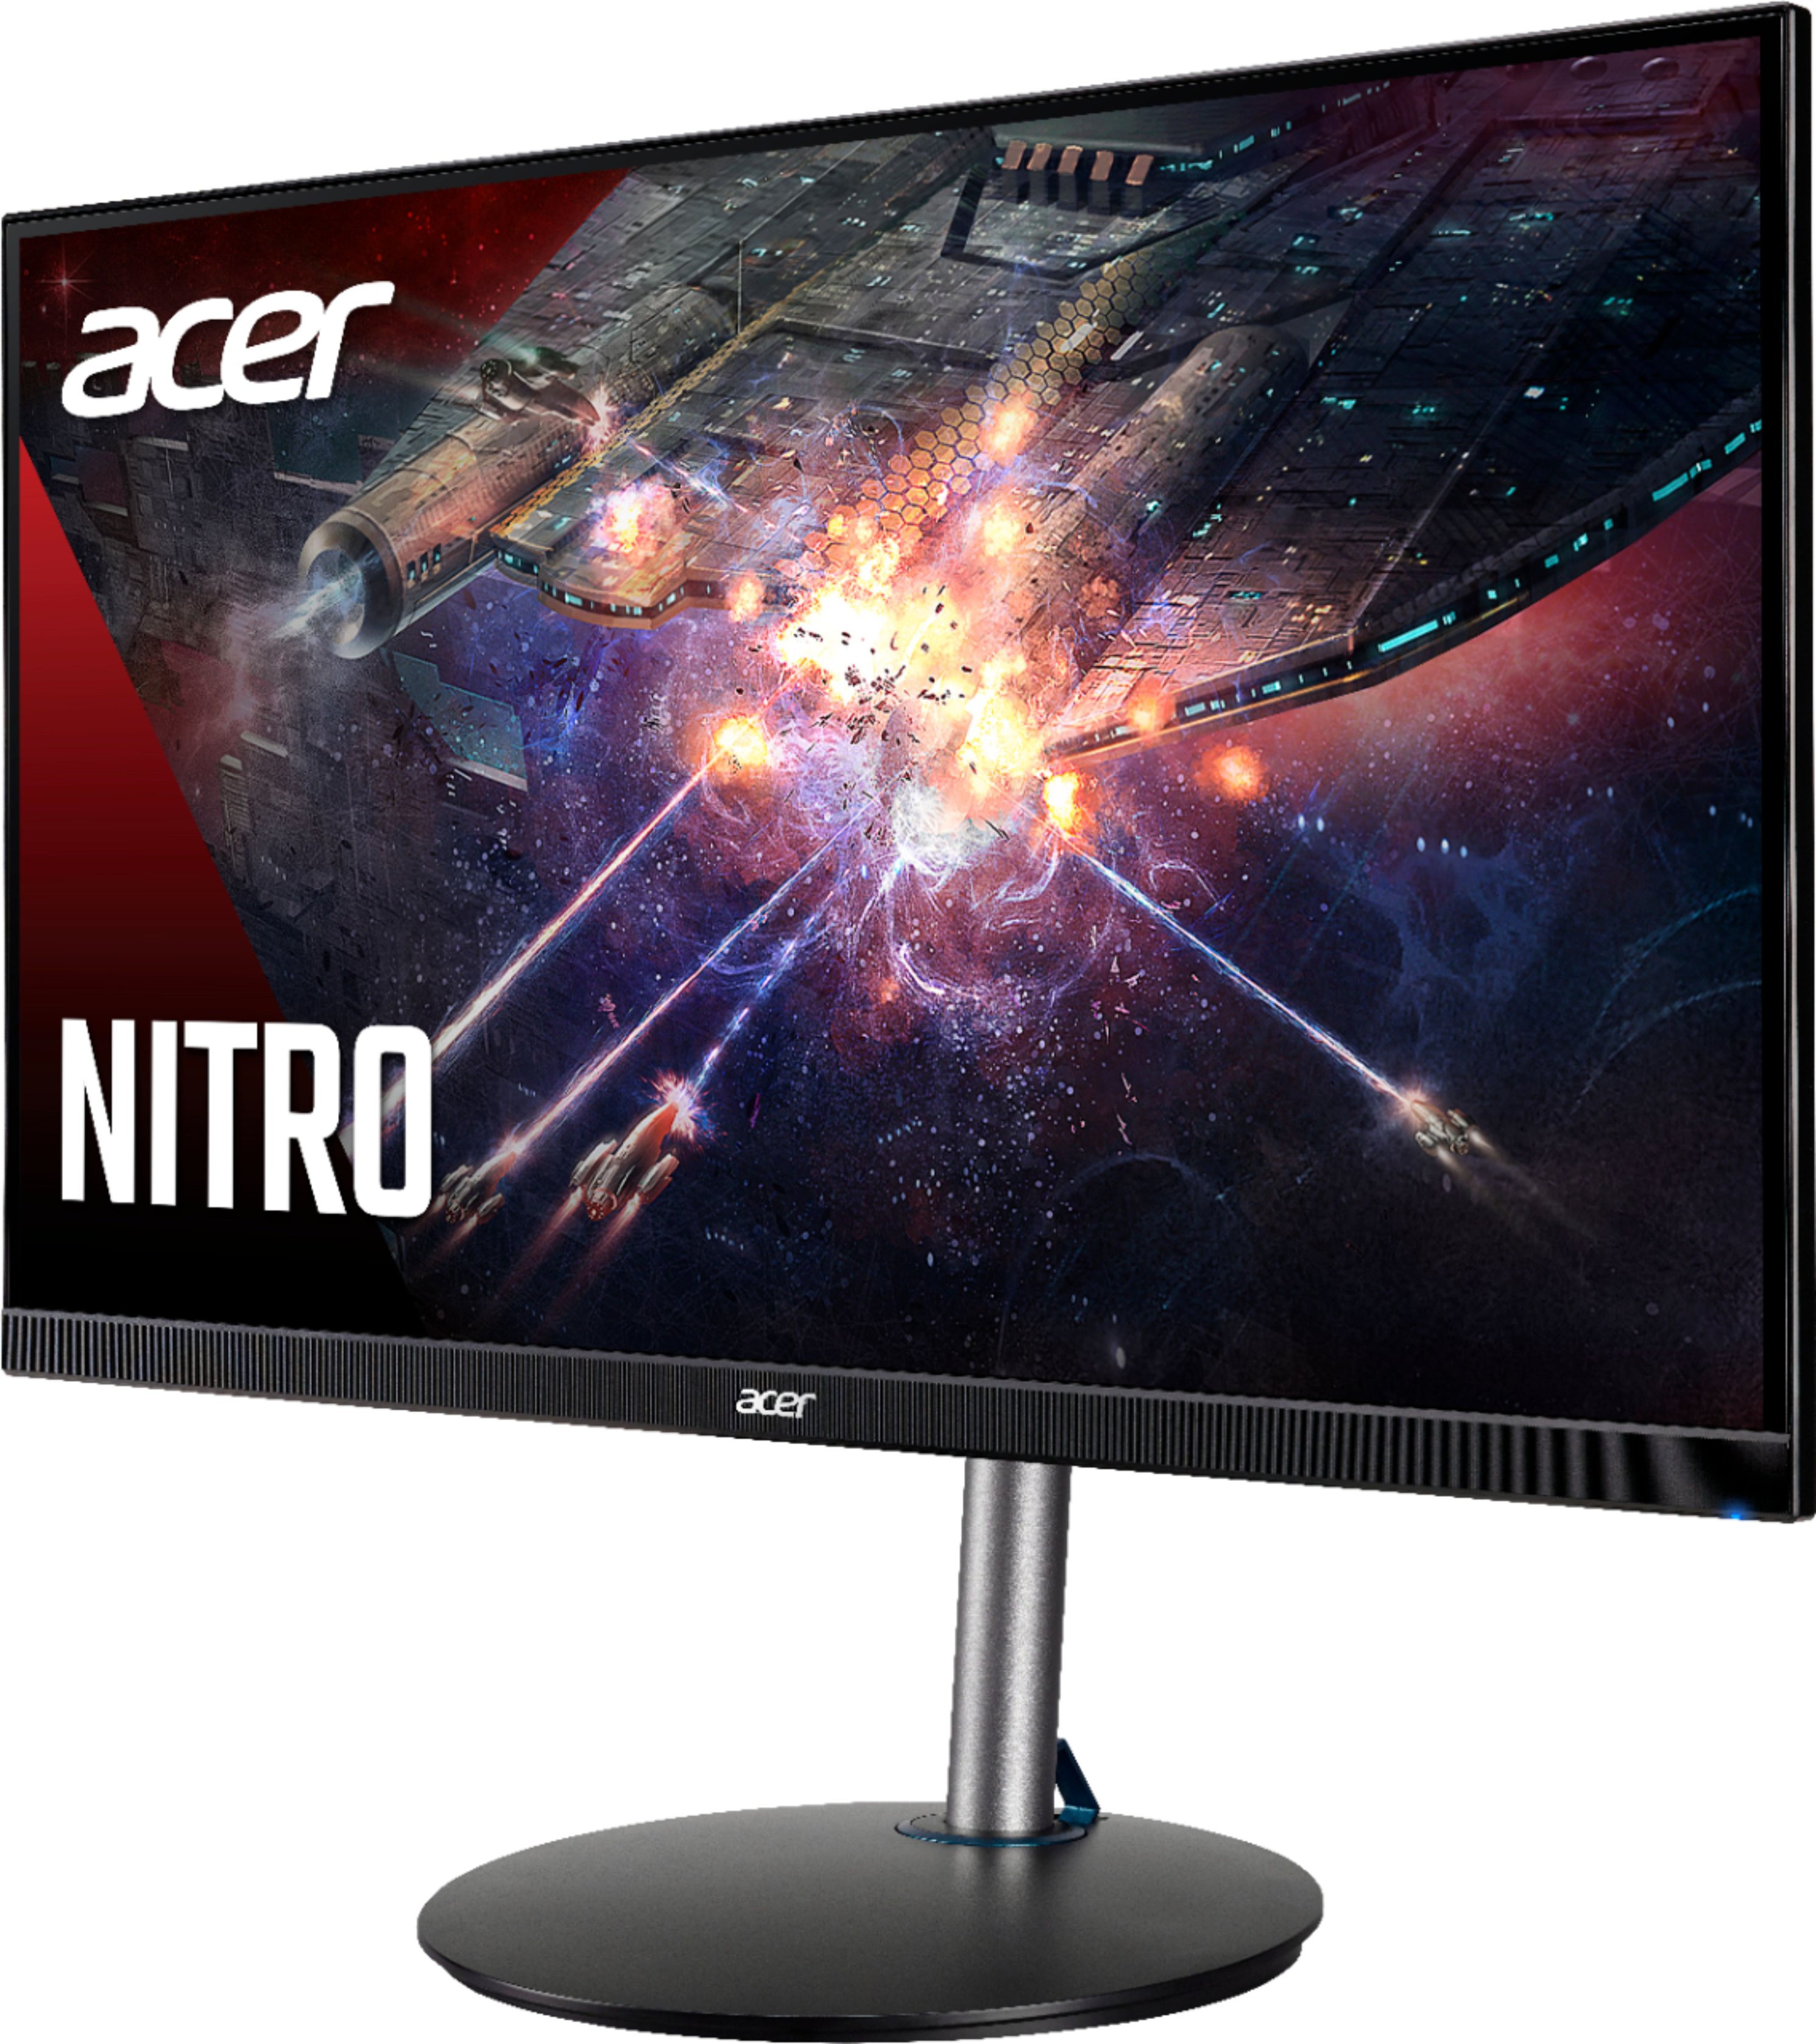 Angle View: Acer - Nitro ED343CURVbmippxx 34" LED Ultrawide QHD FreeSync Monitor